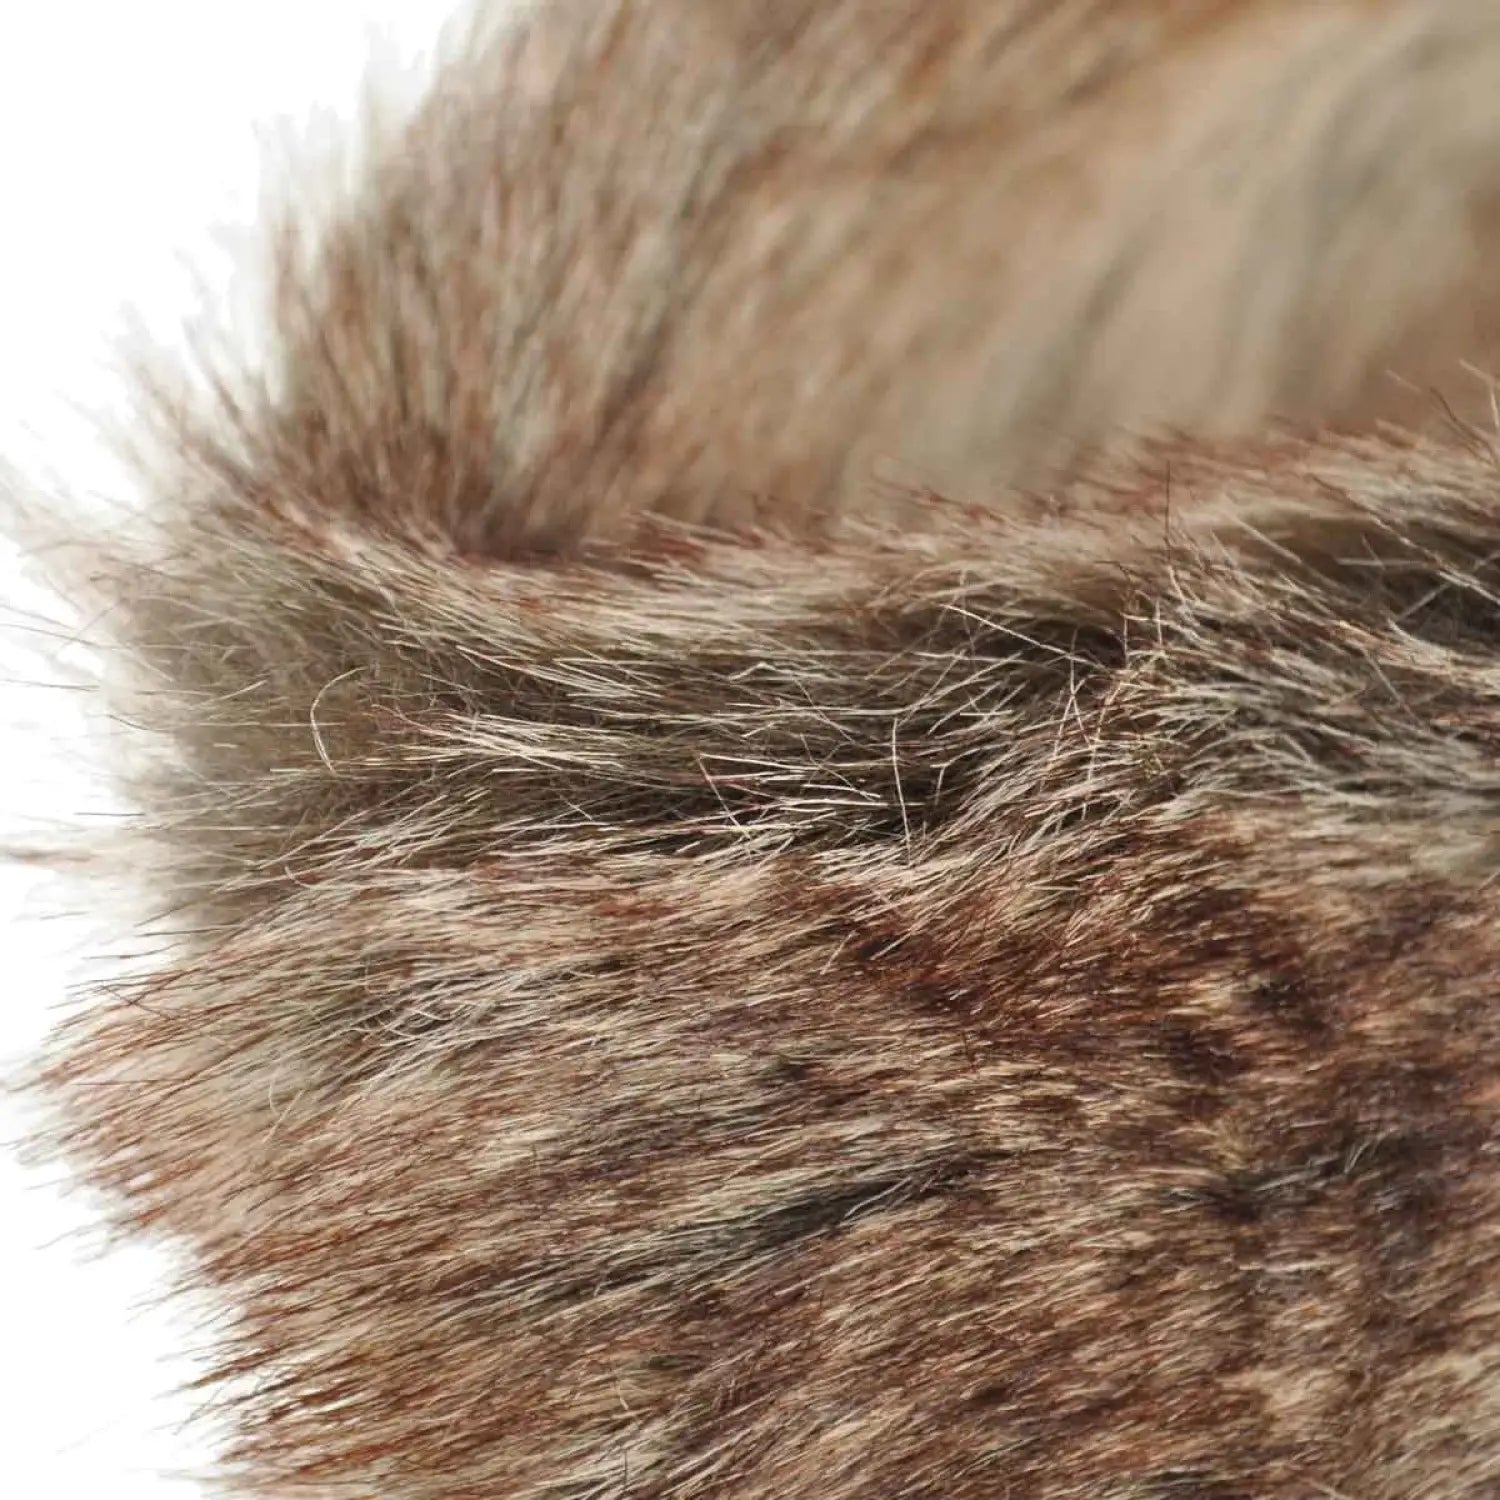 Faux fur textured headband close up for Winter & Autumn fashion.